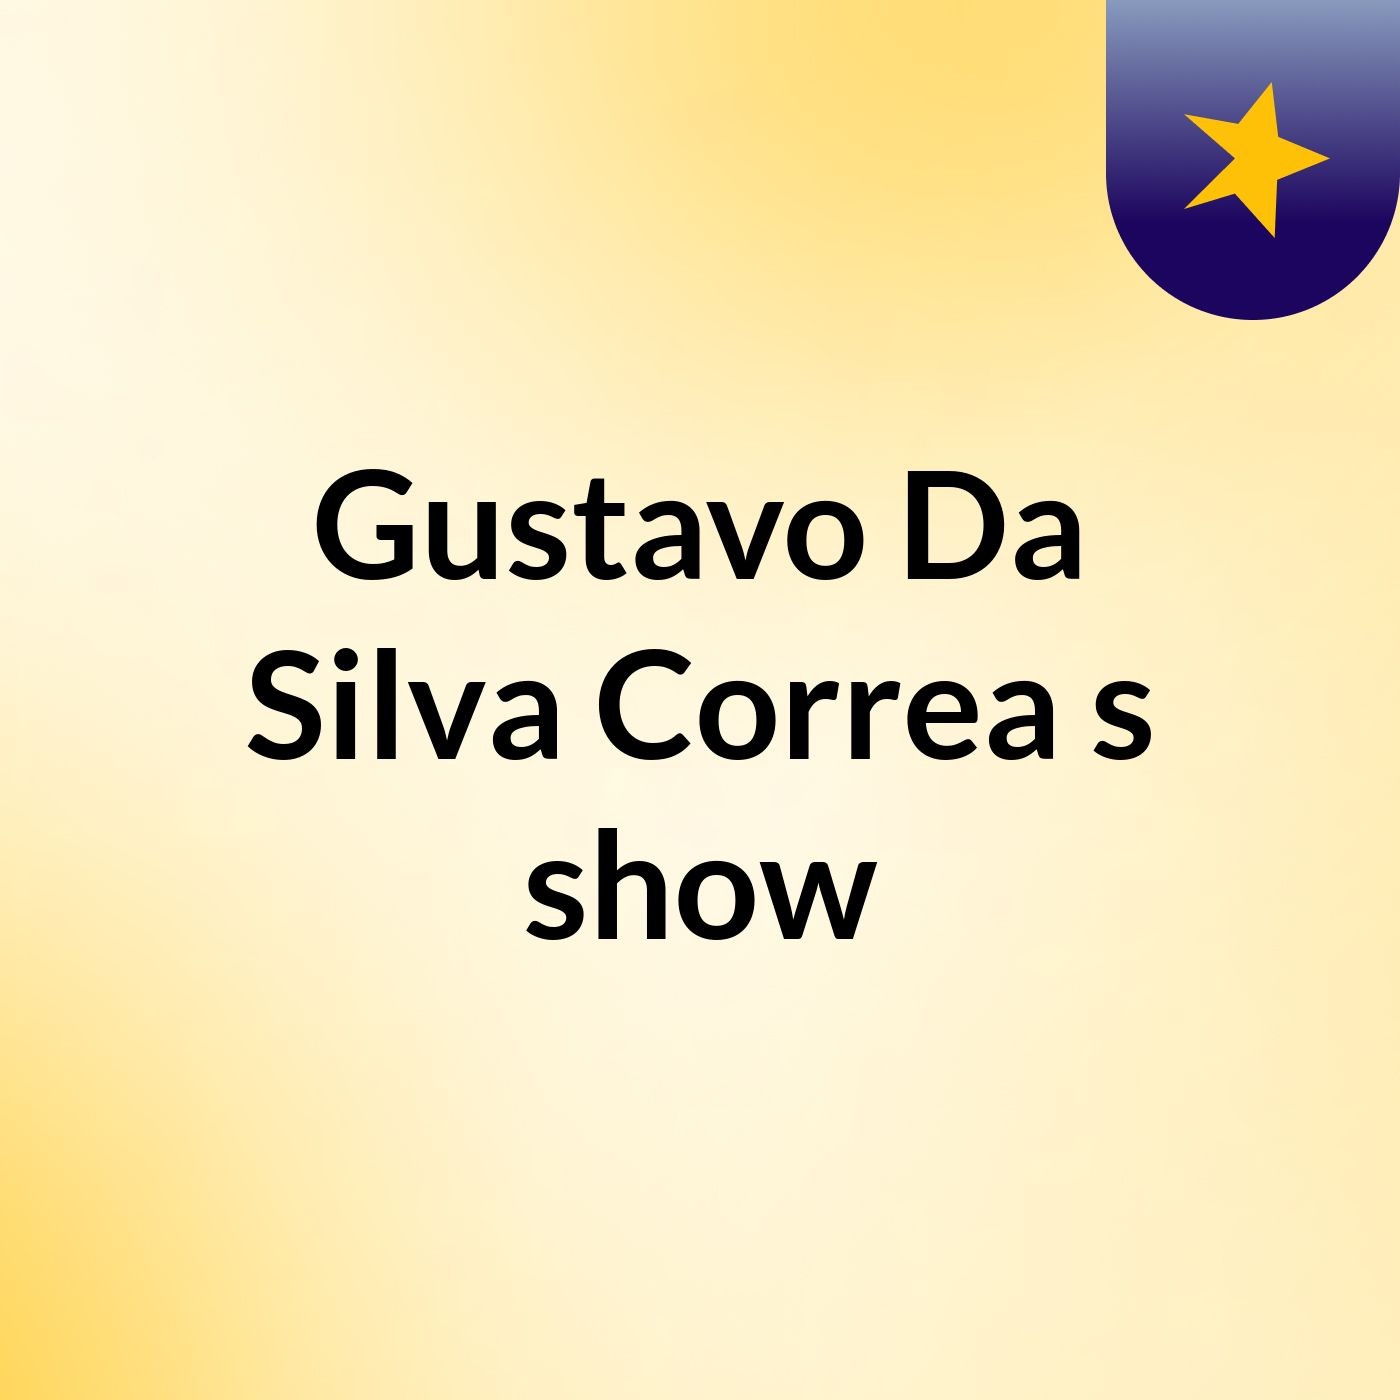 Gustavo Da Silva Correa's show